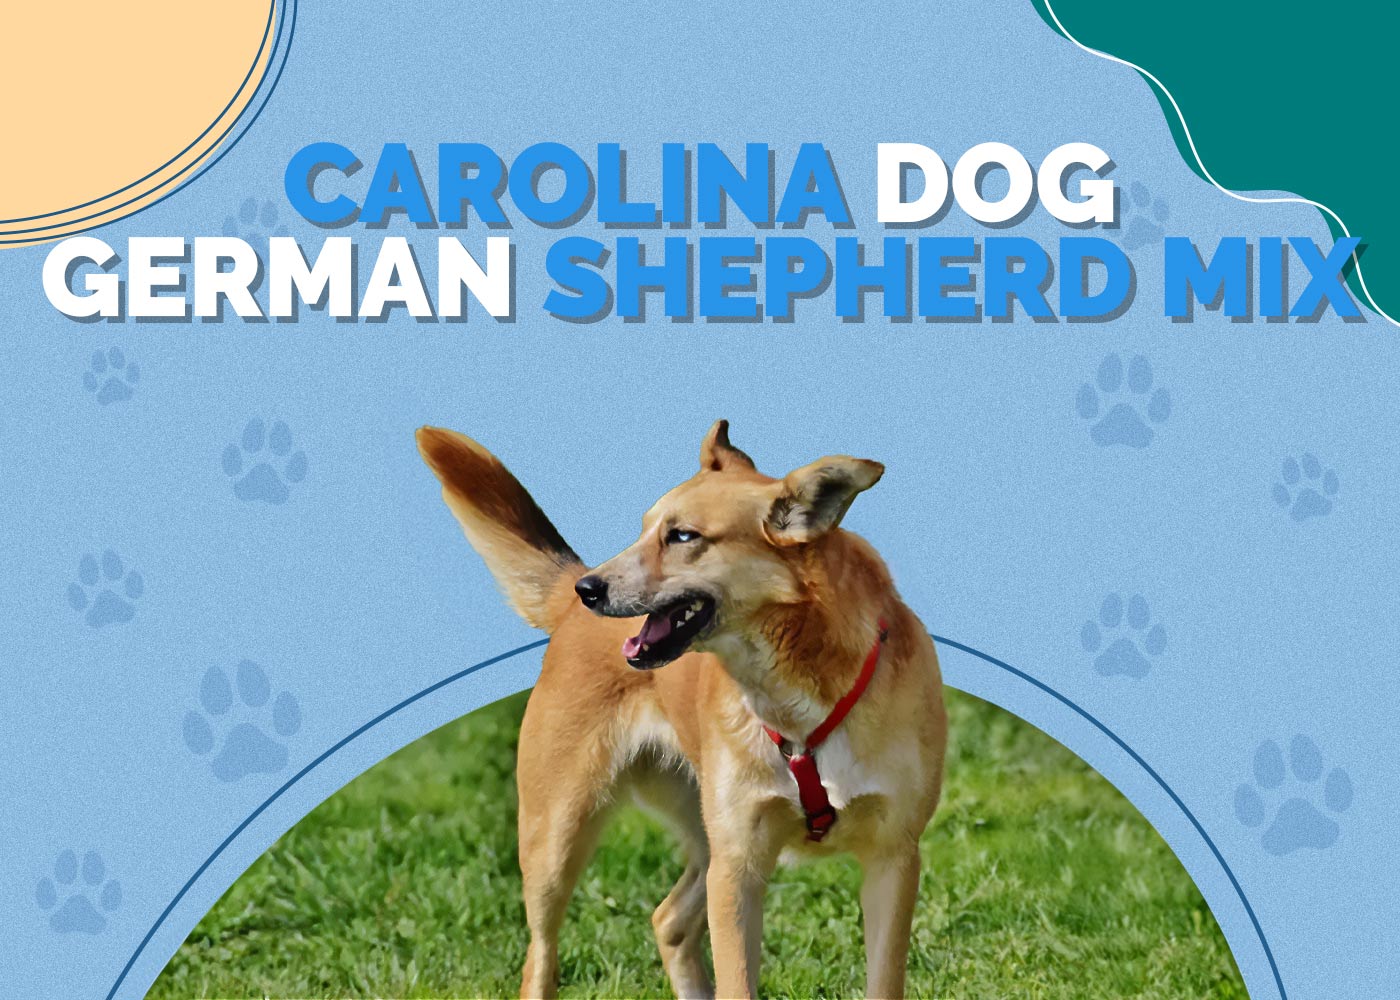 Carolina Dog German Shepherd Mix